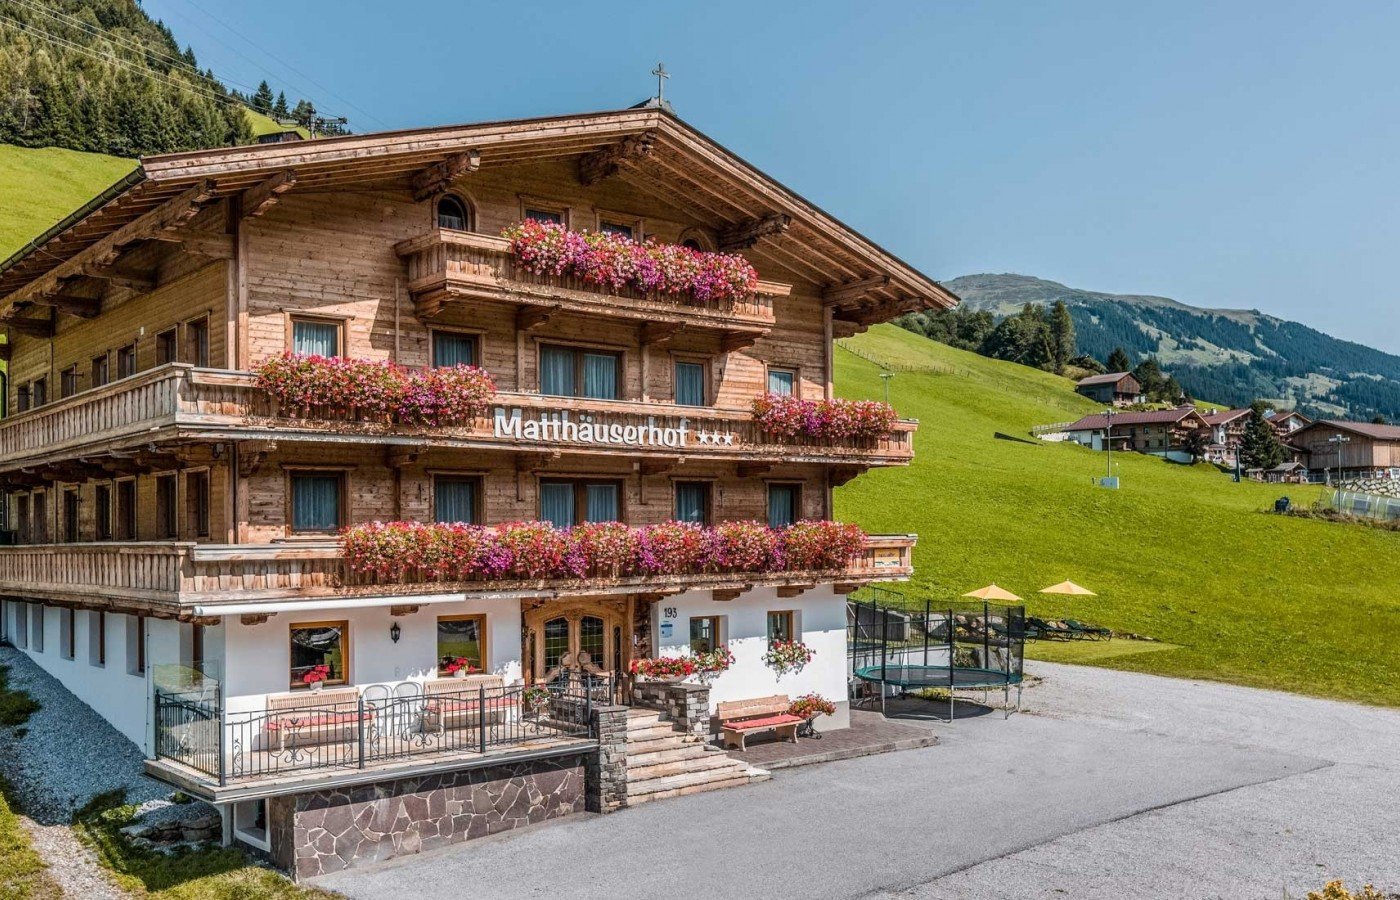 Hotel Matthäuserhof in Gerlos in the Ziller valley